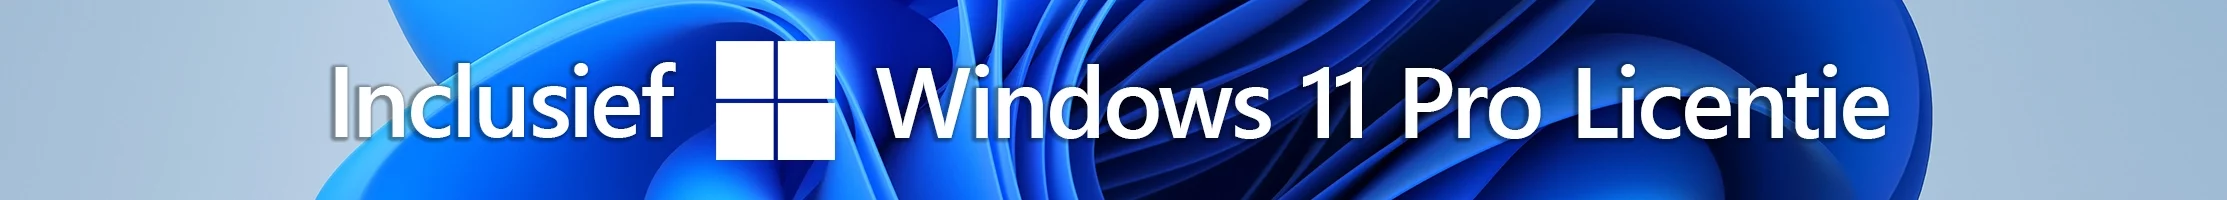 Inclusief Windows 11 Pro Licentie